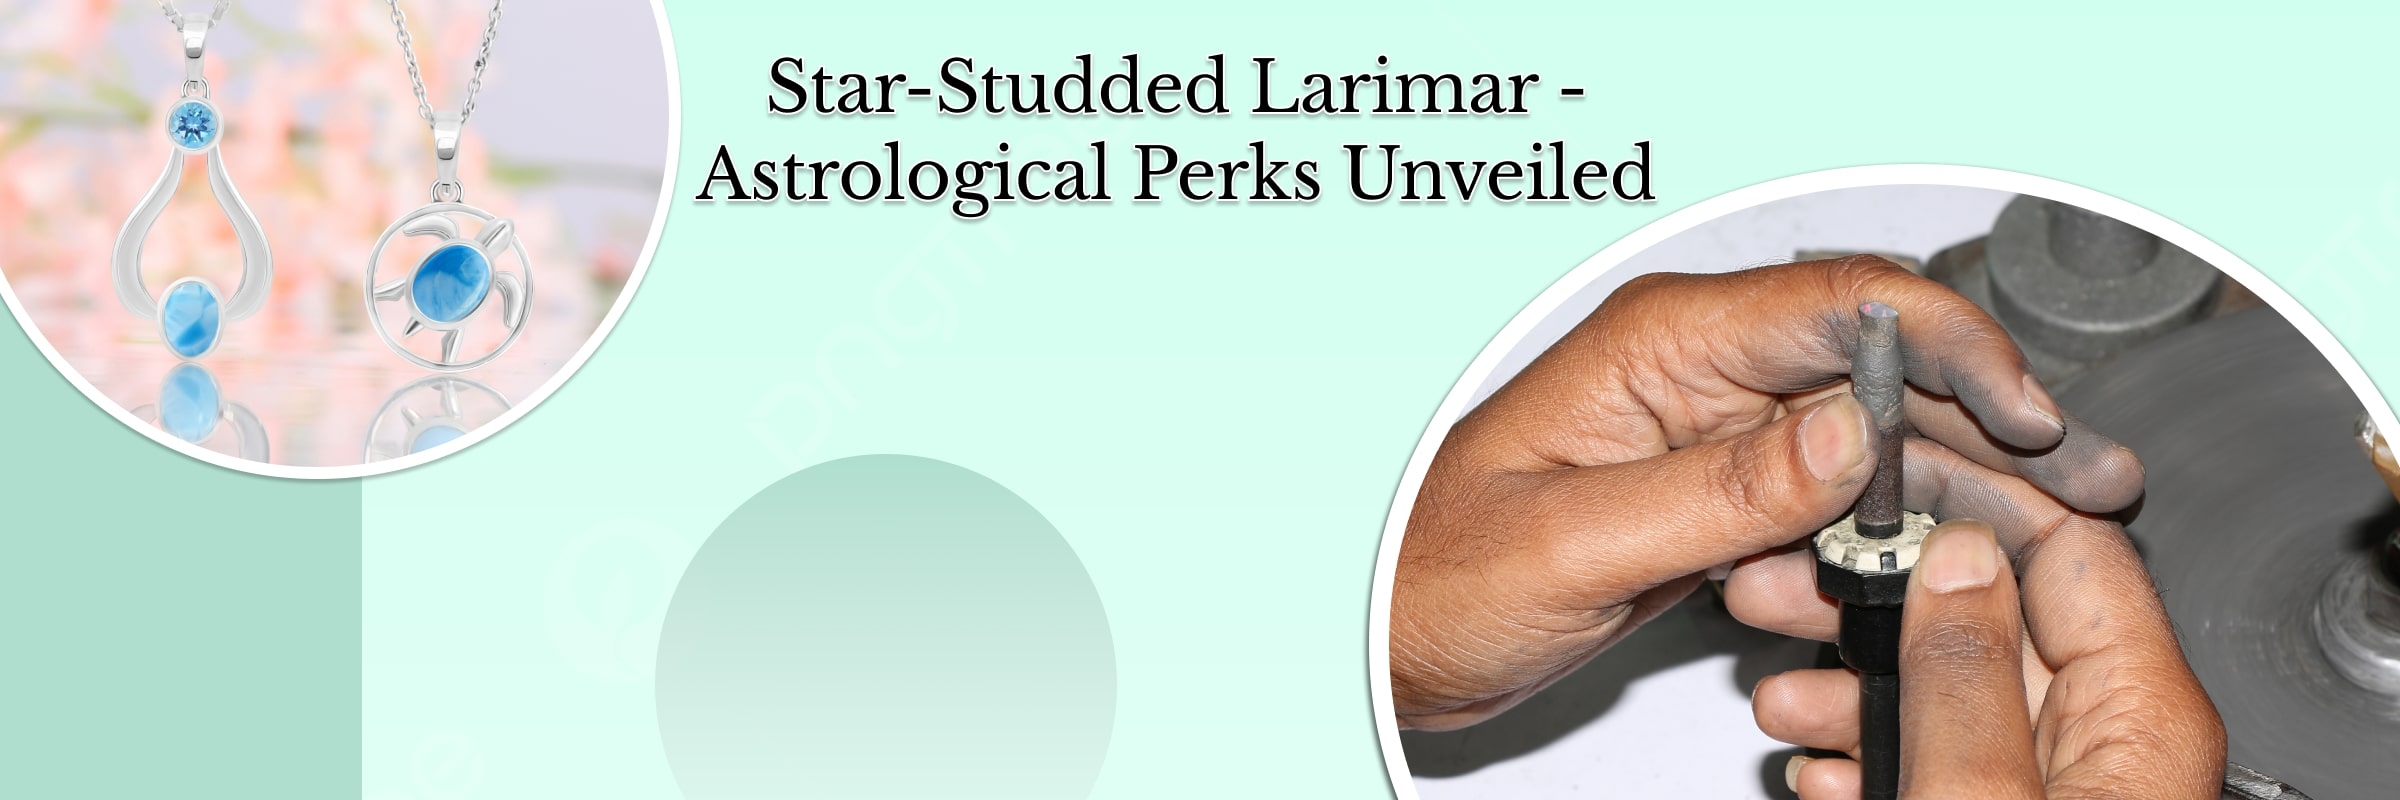 Larimar & It's Astrological Benefits